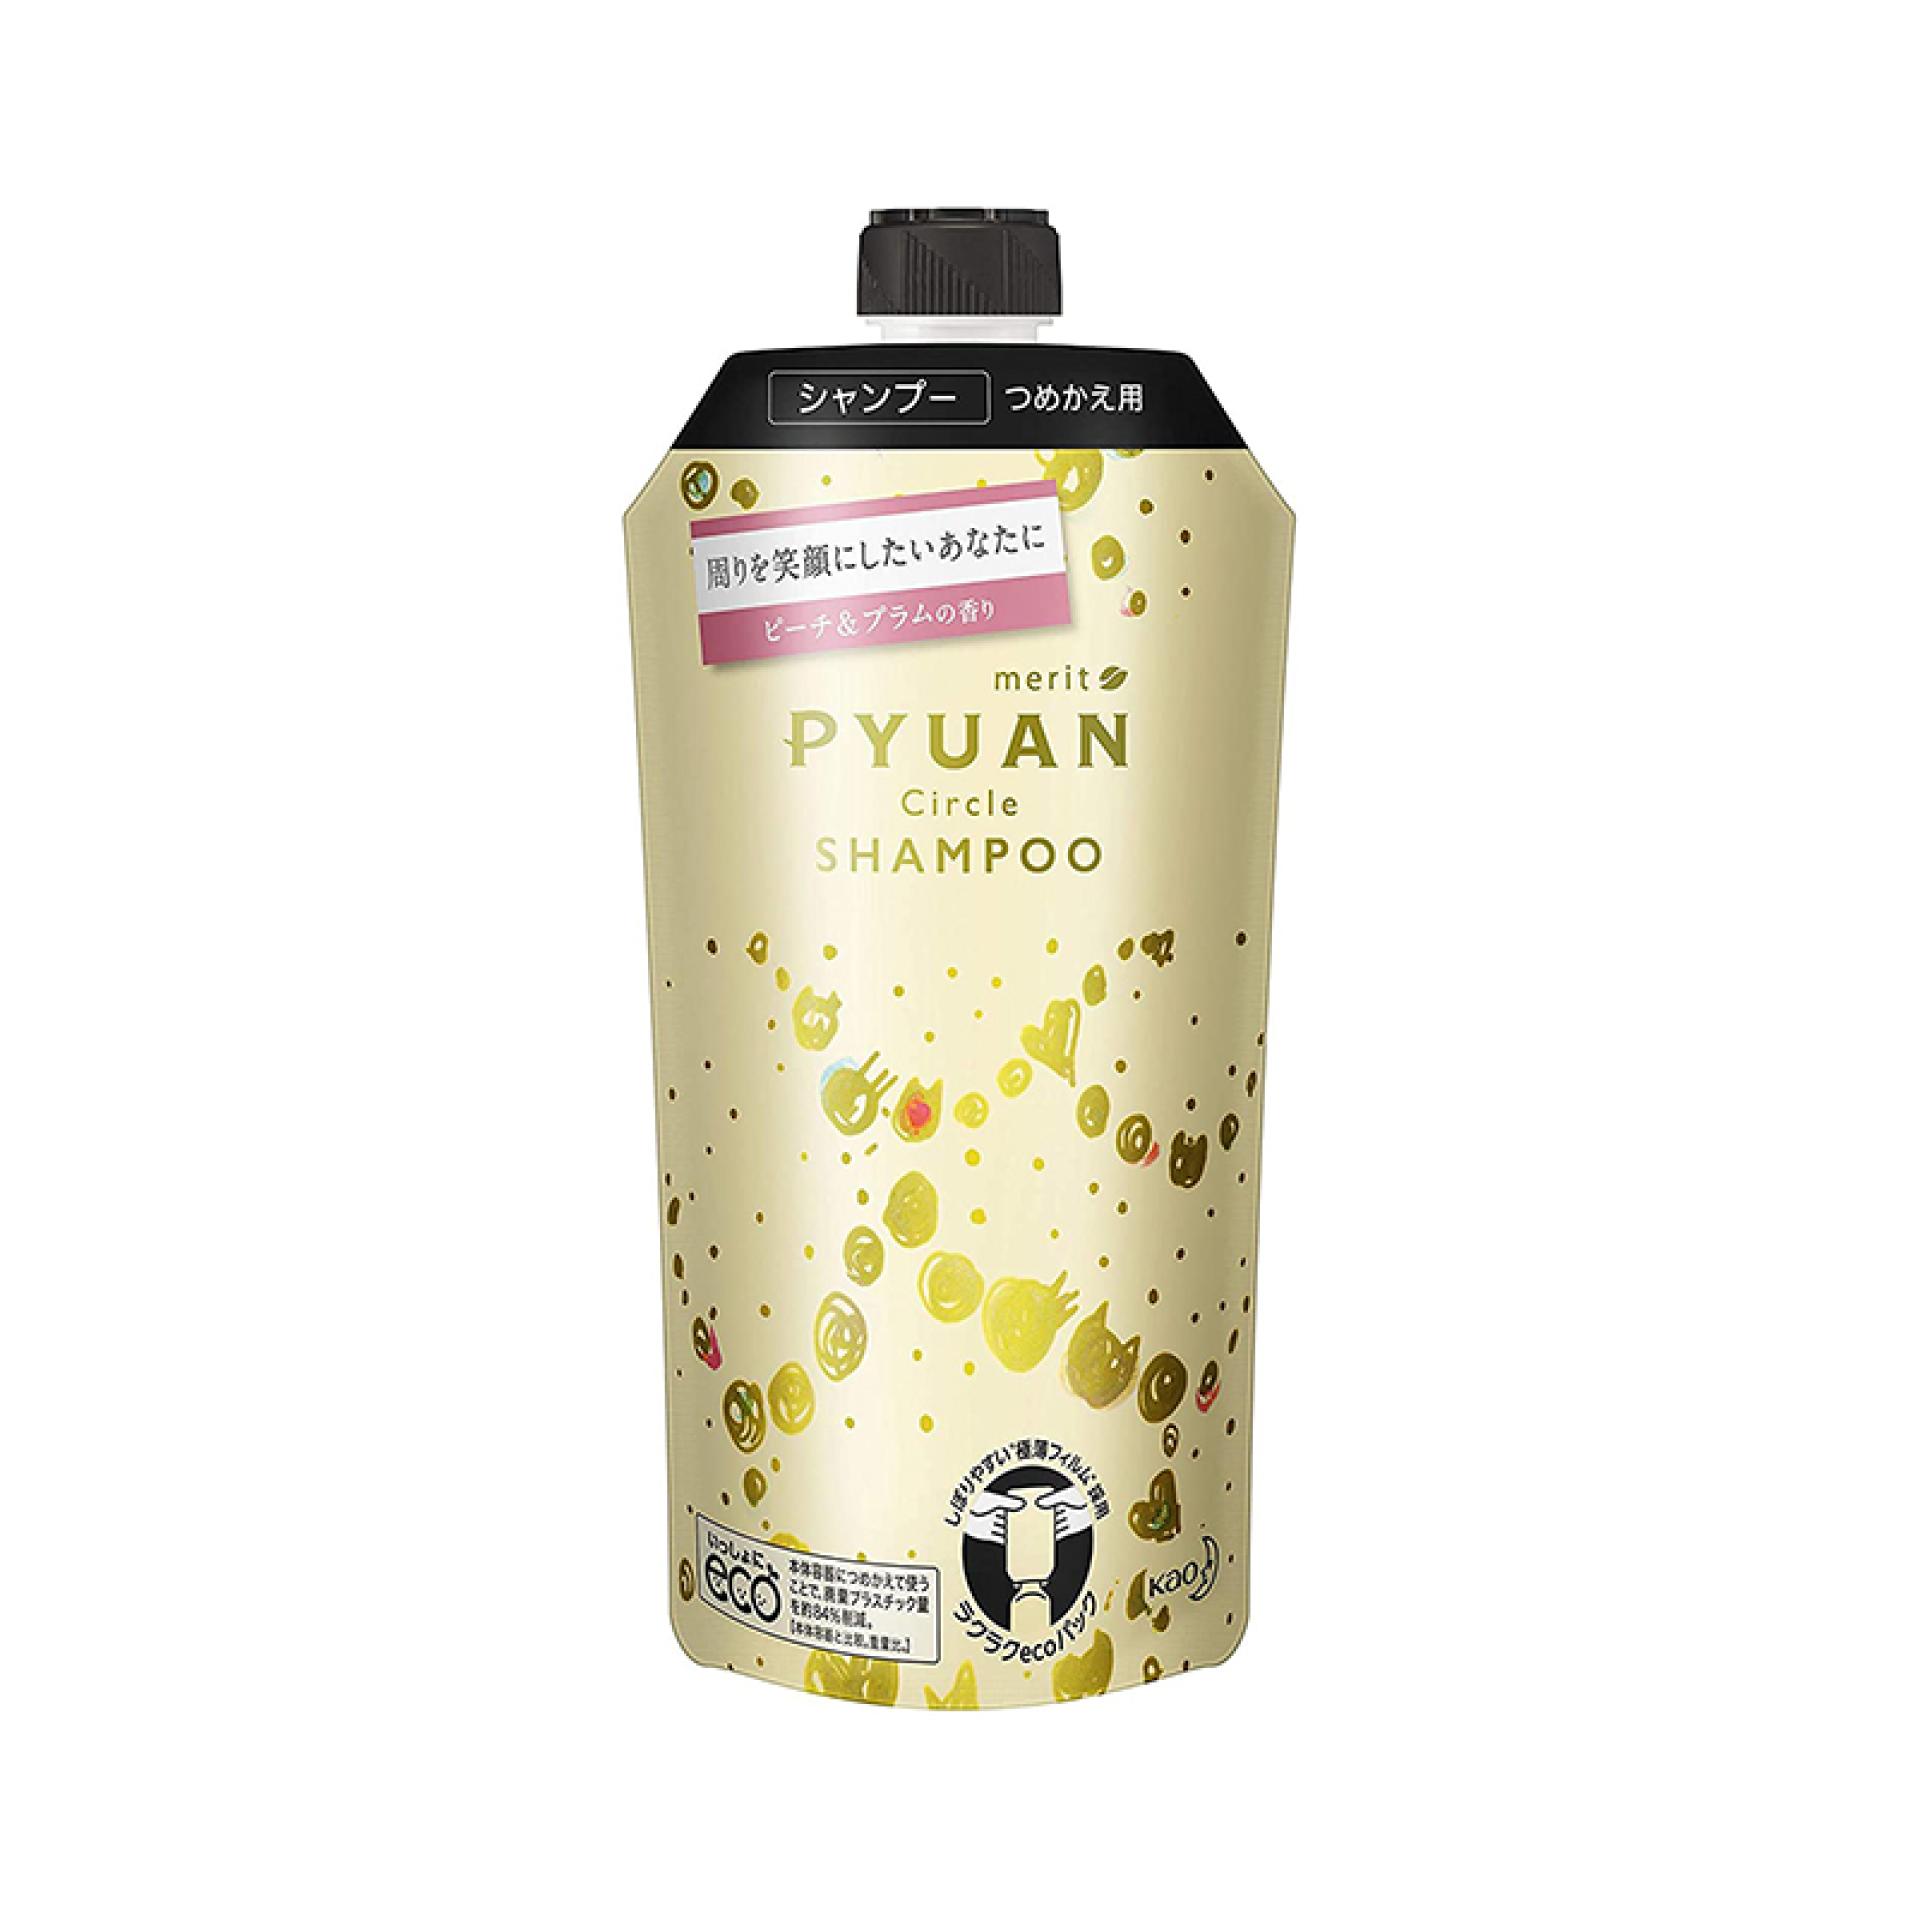 Kao Merit Pyuan Circle Shampoo Refill 340ml Gold - Peach & Plum